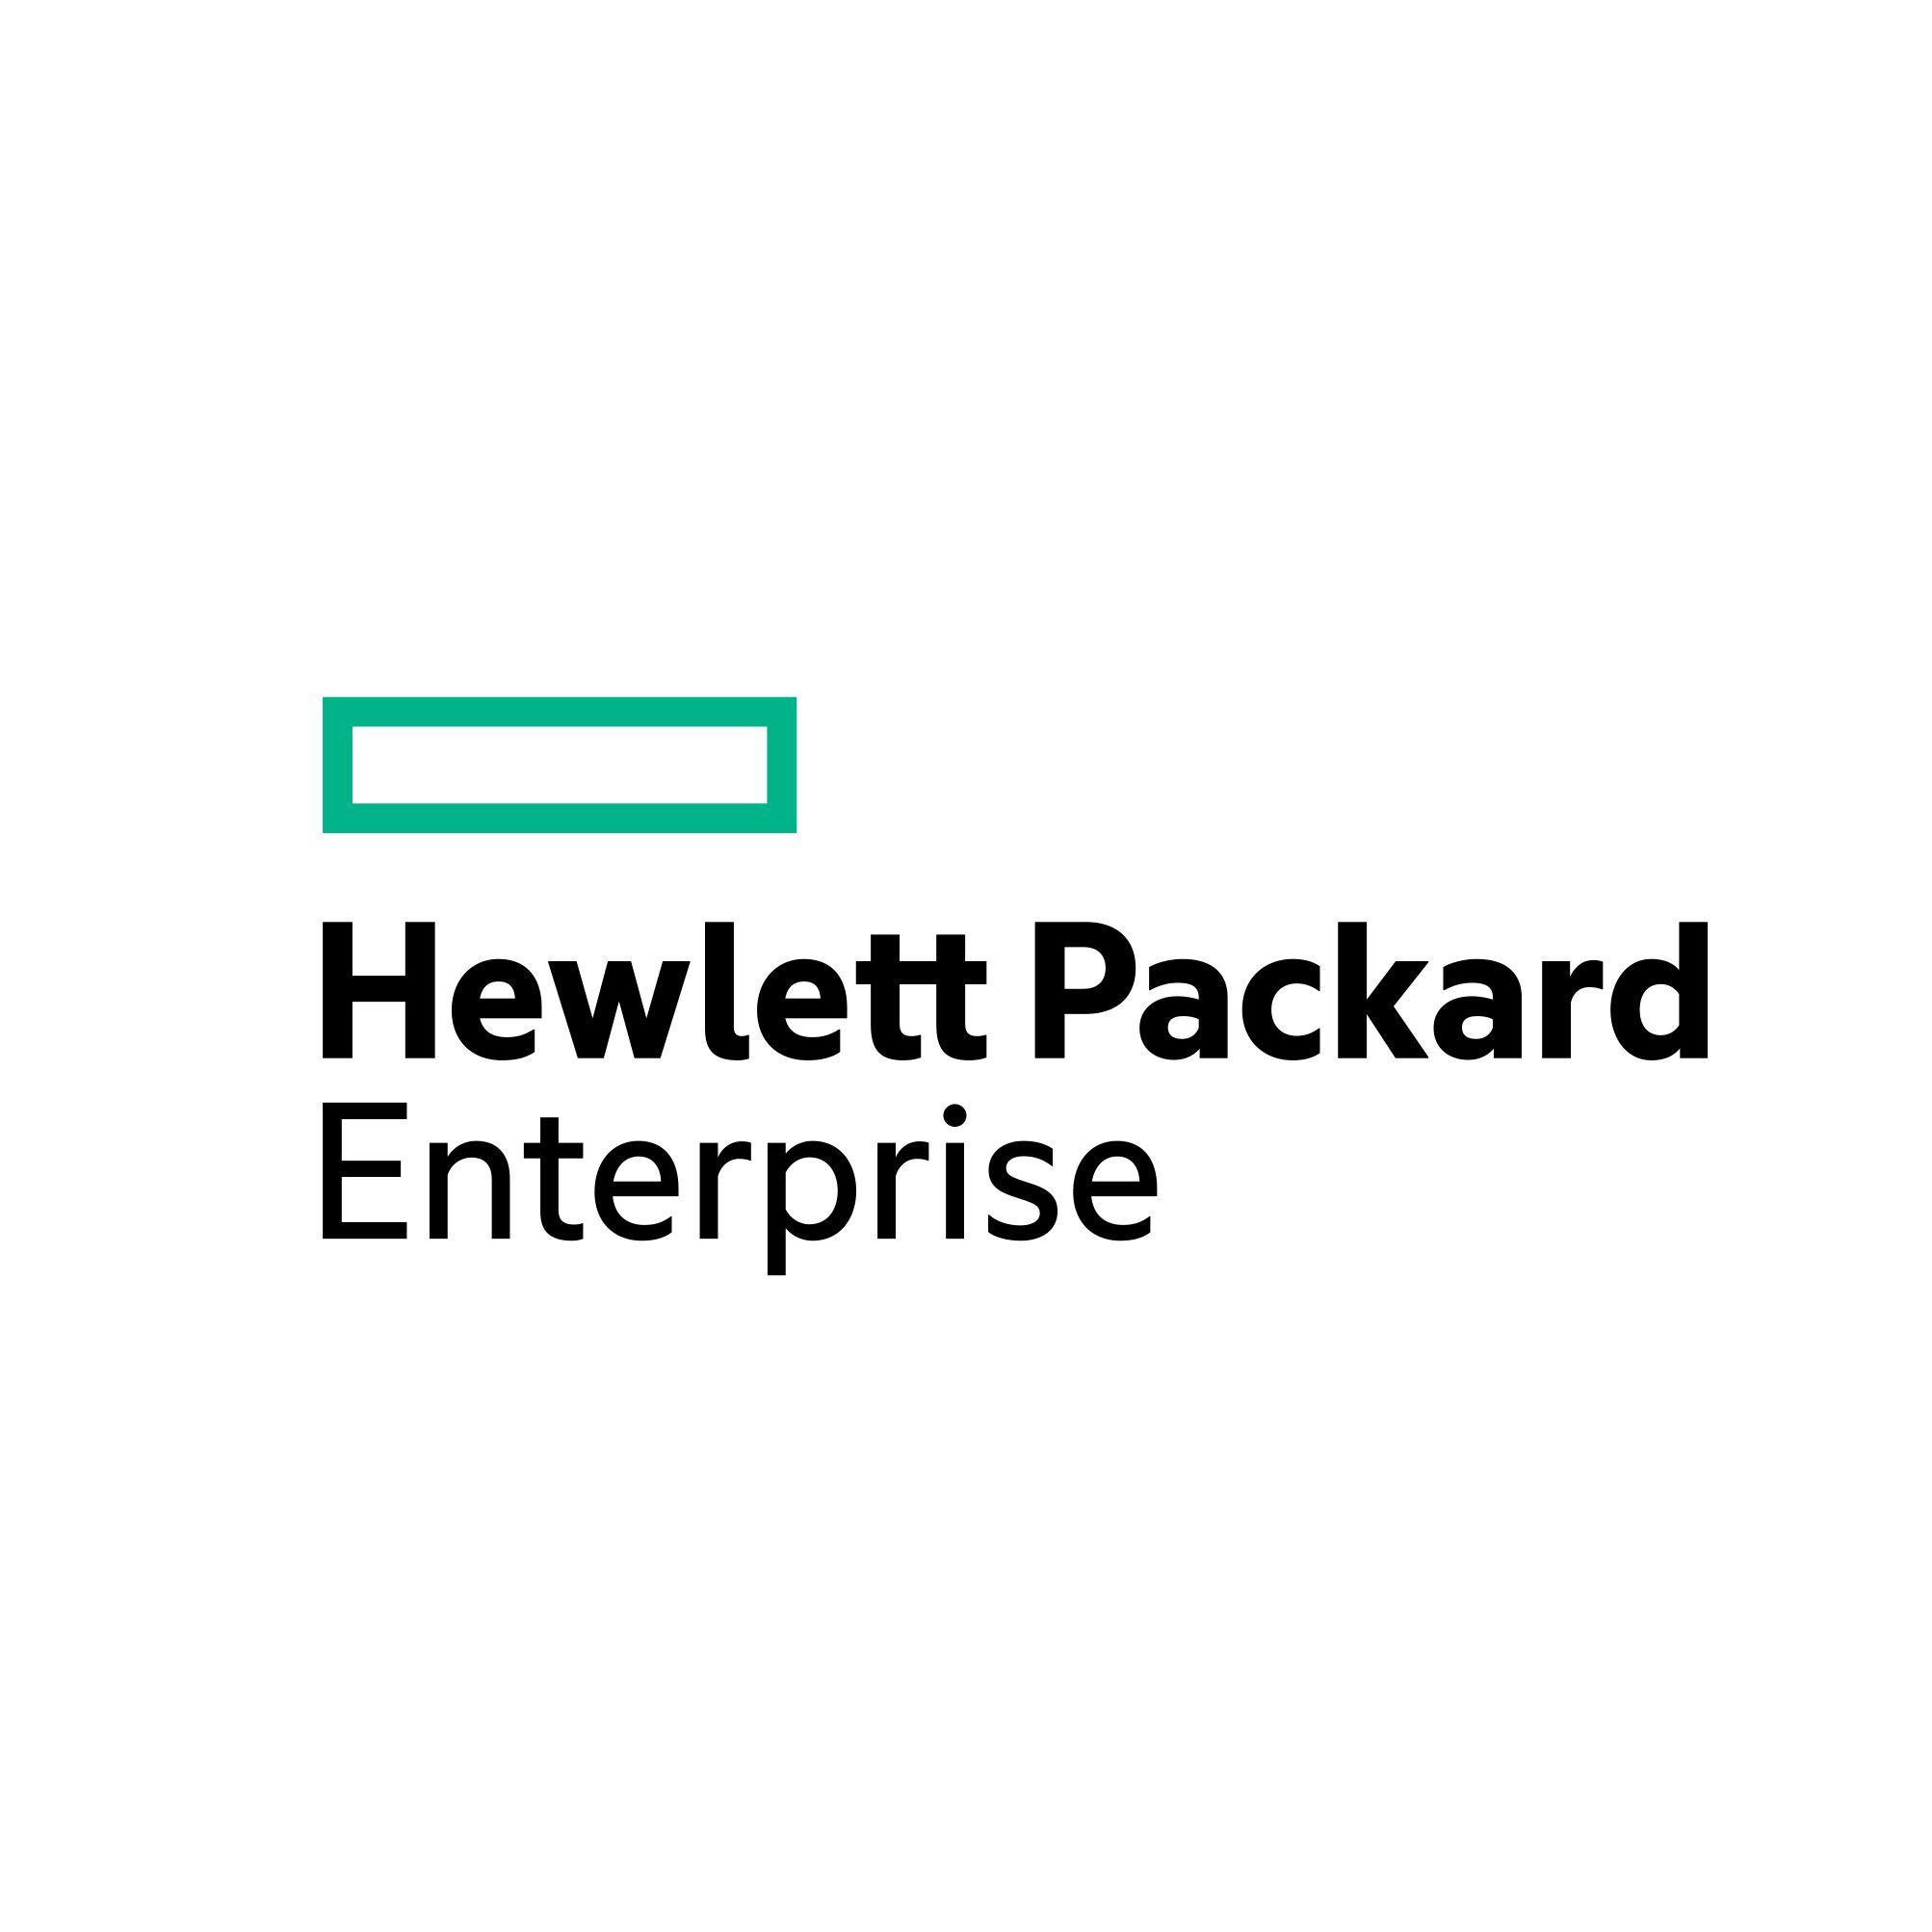 American Information Technology Company Logo - Hewlett Packard Enterprise (HPE)